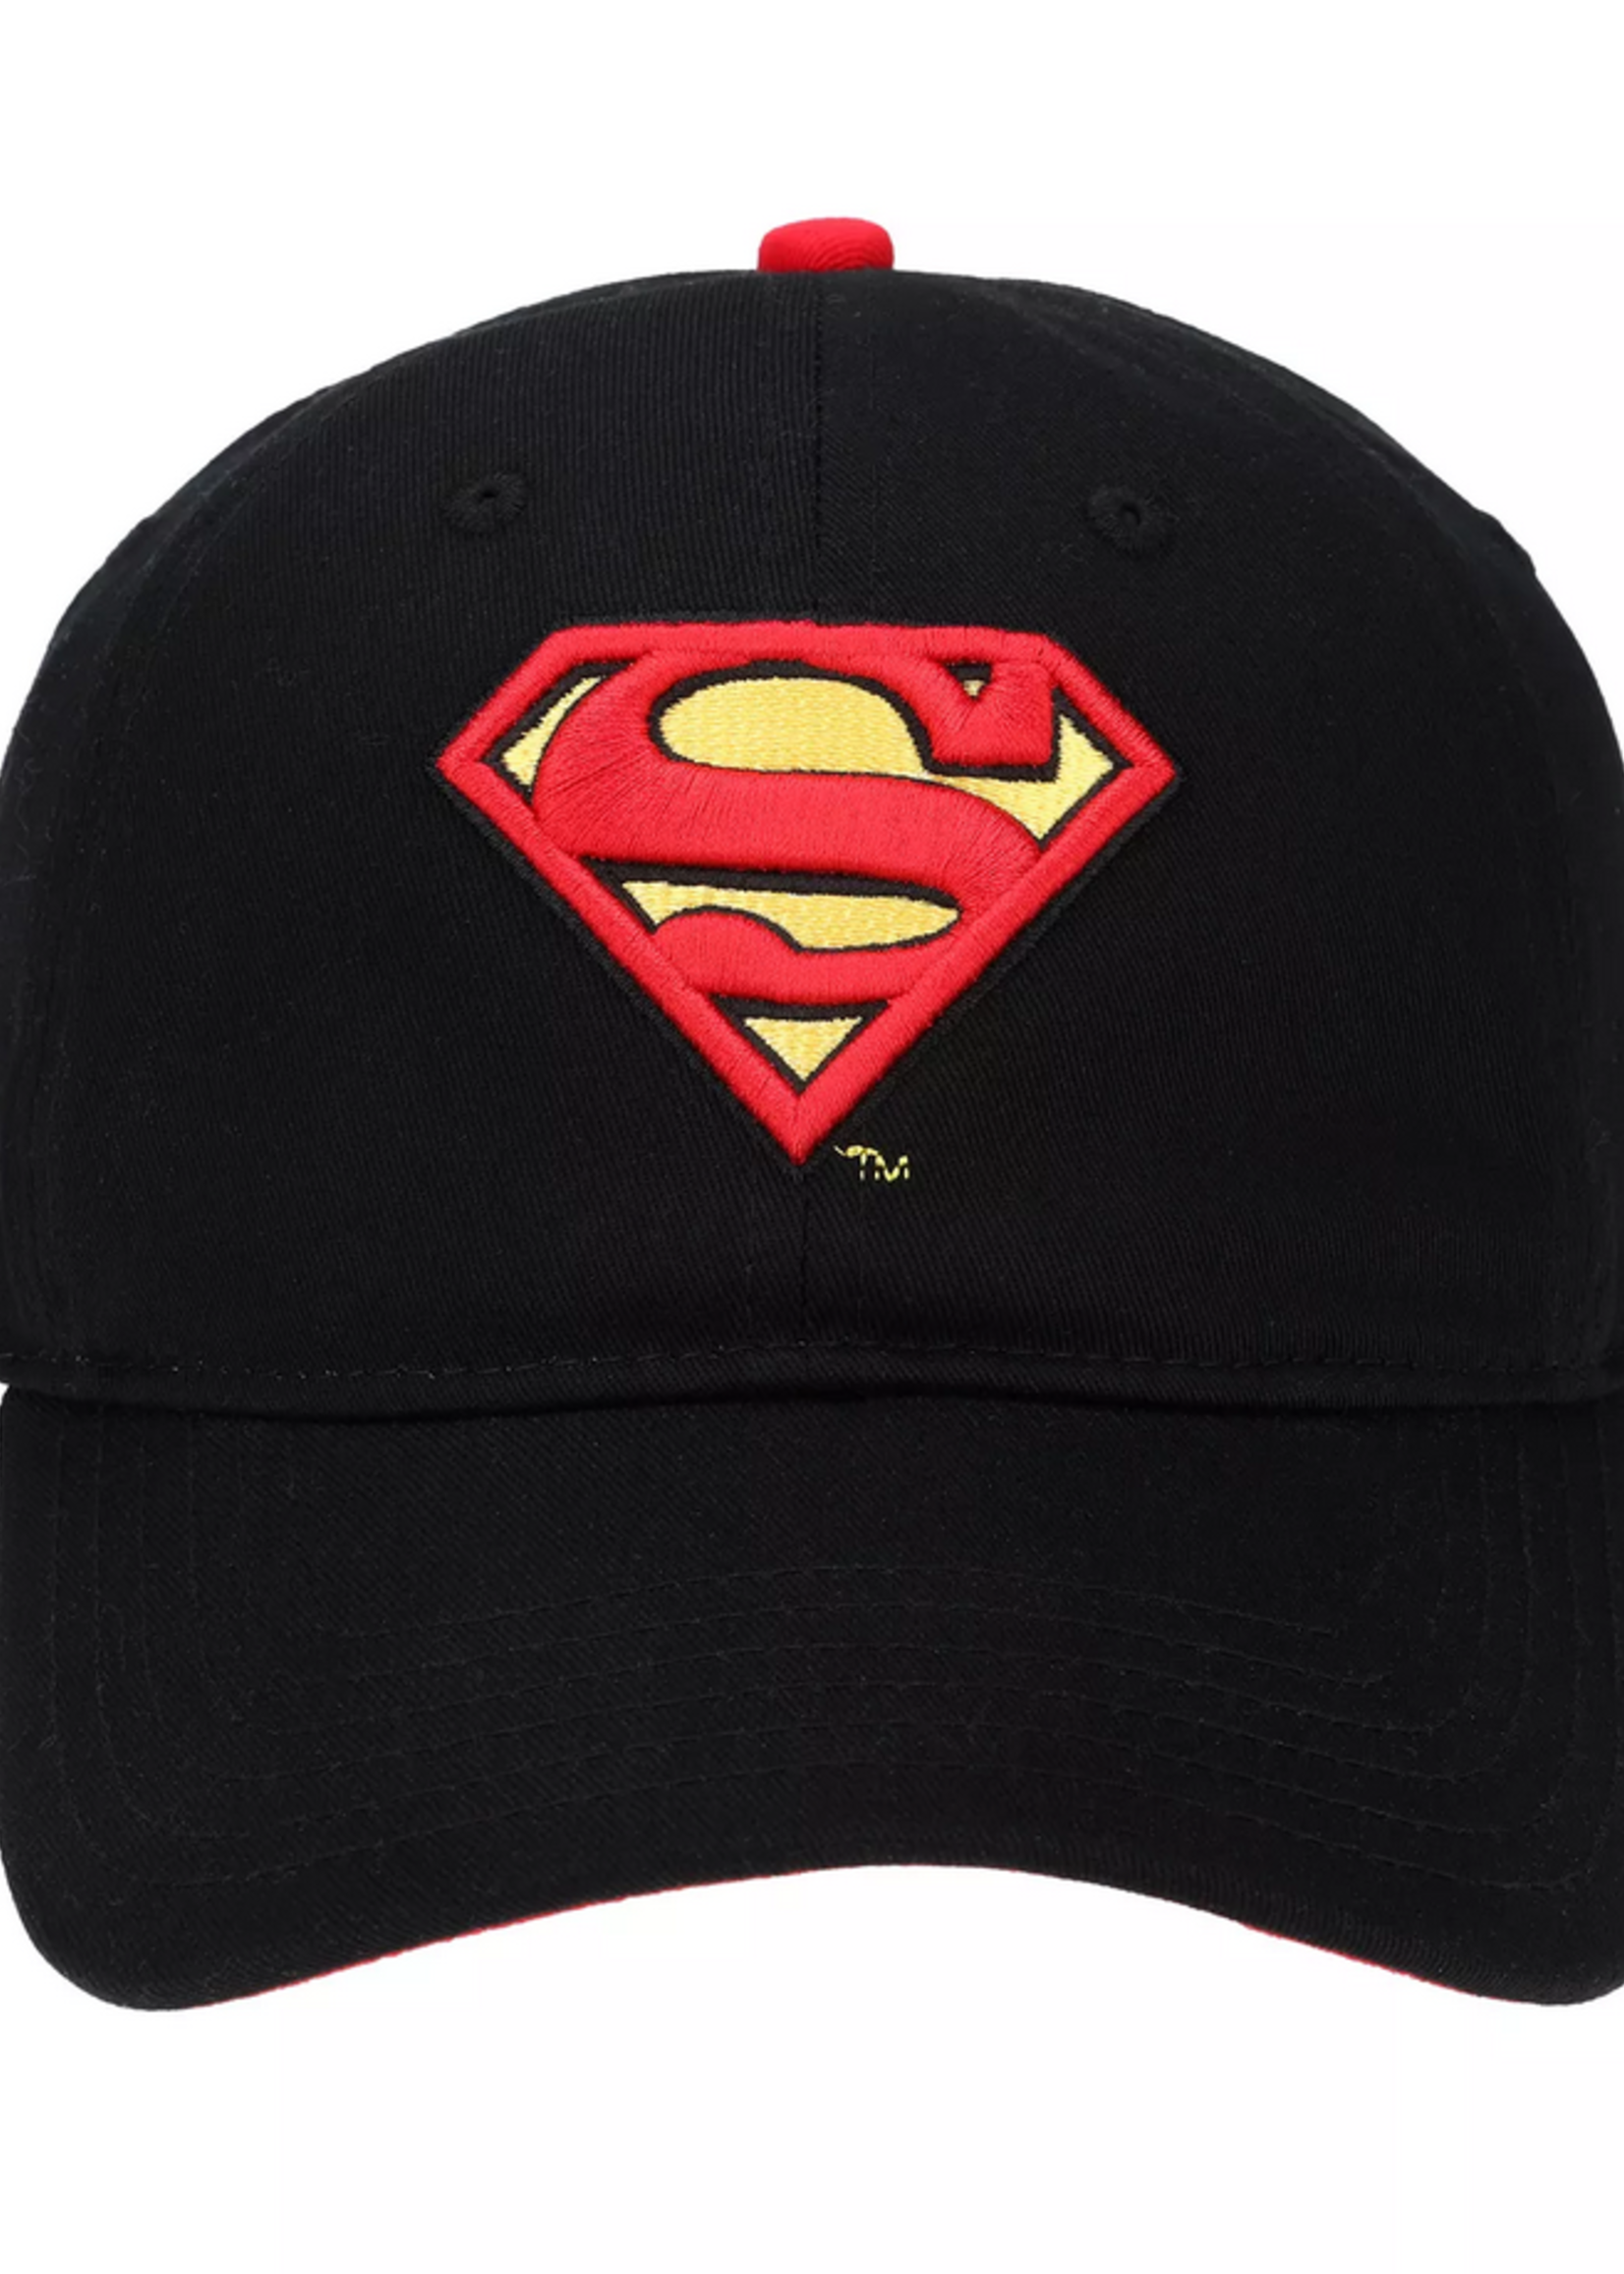 DC Comics Superman Low Profile Unstructured Dad Hat Adjustable Baseball Cap